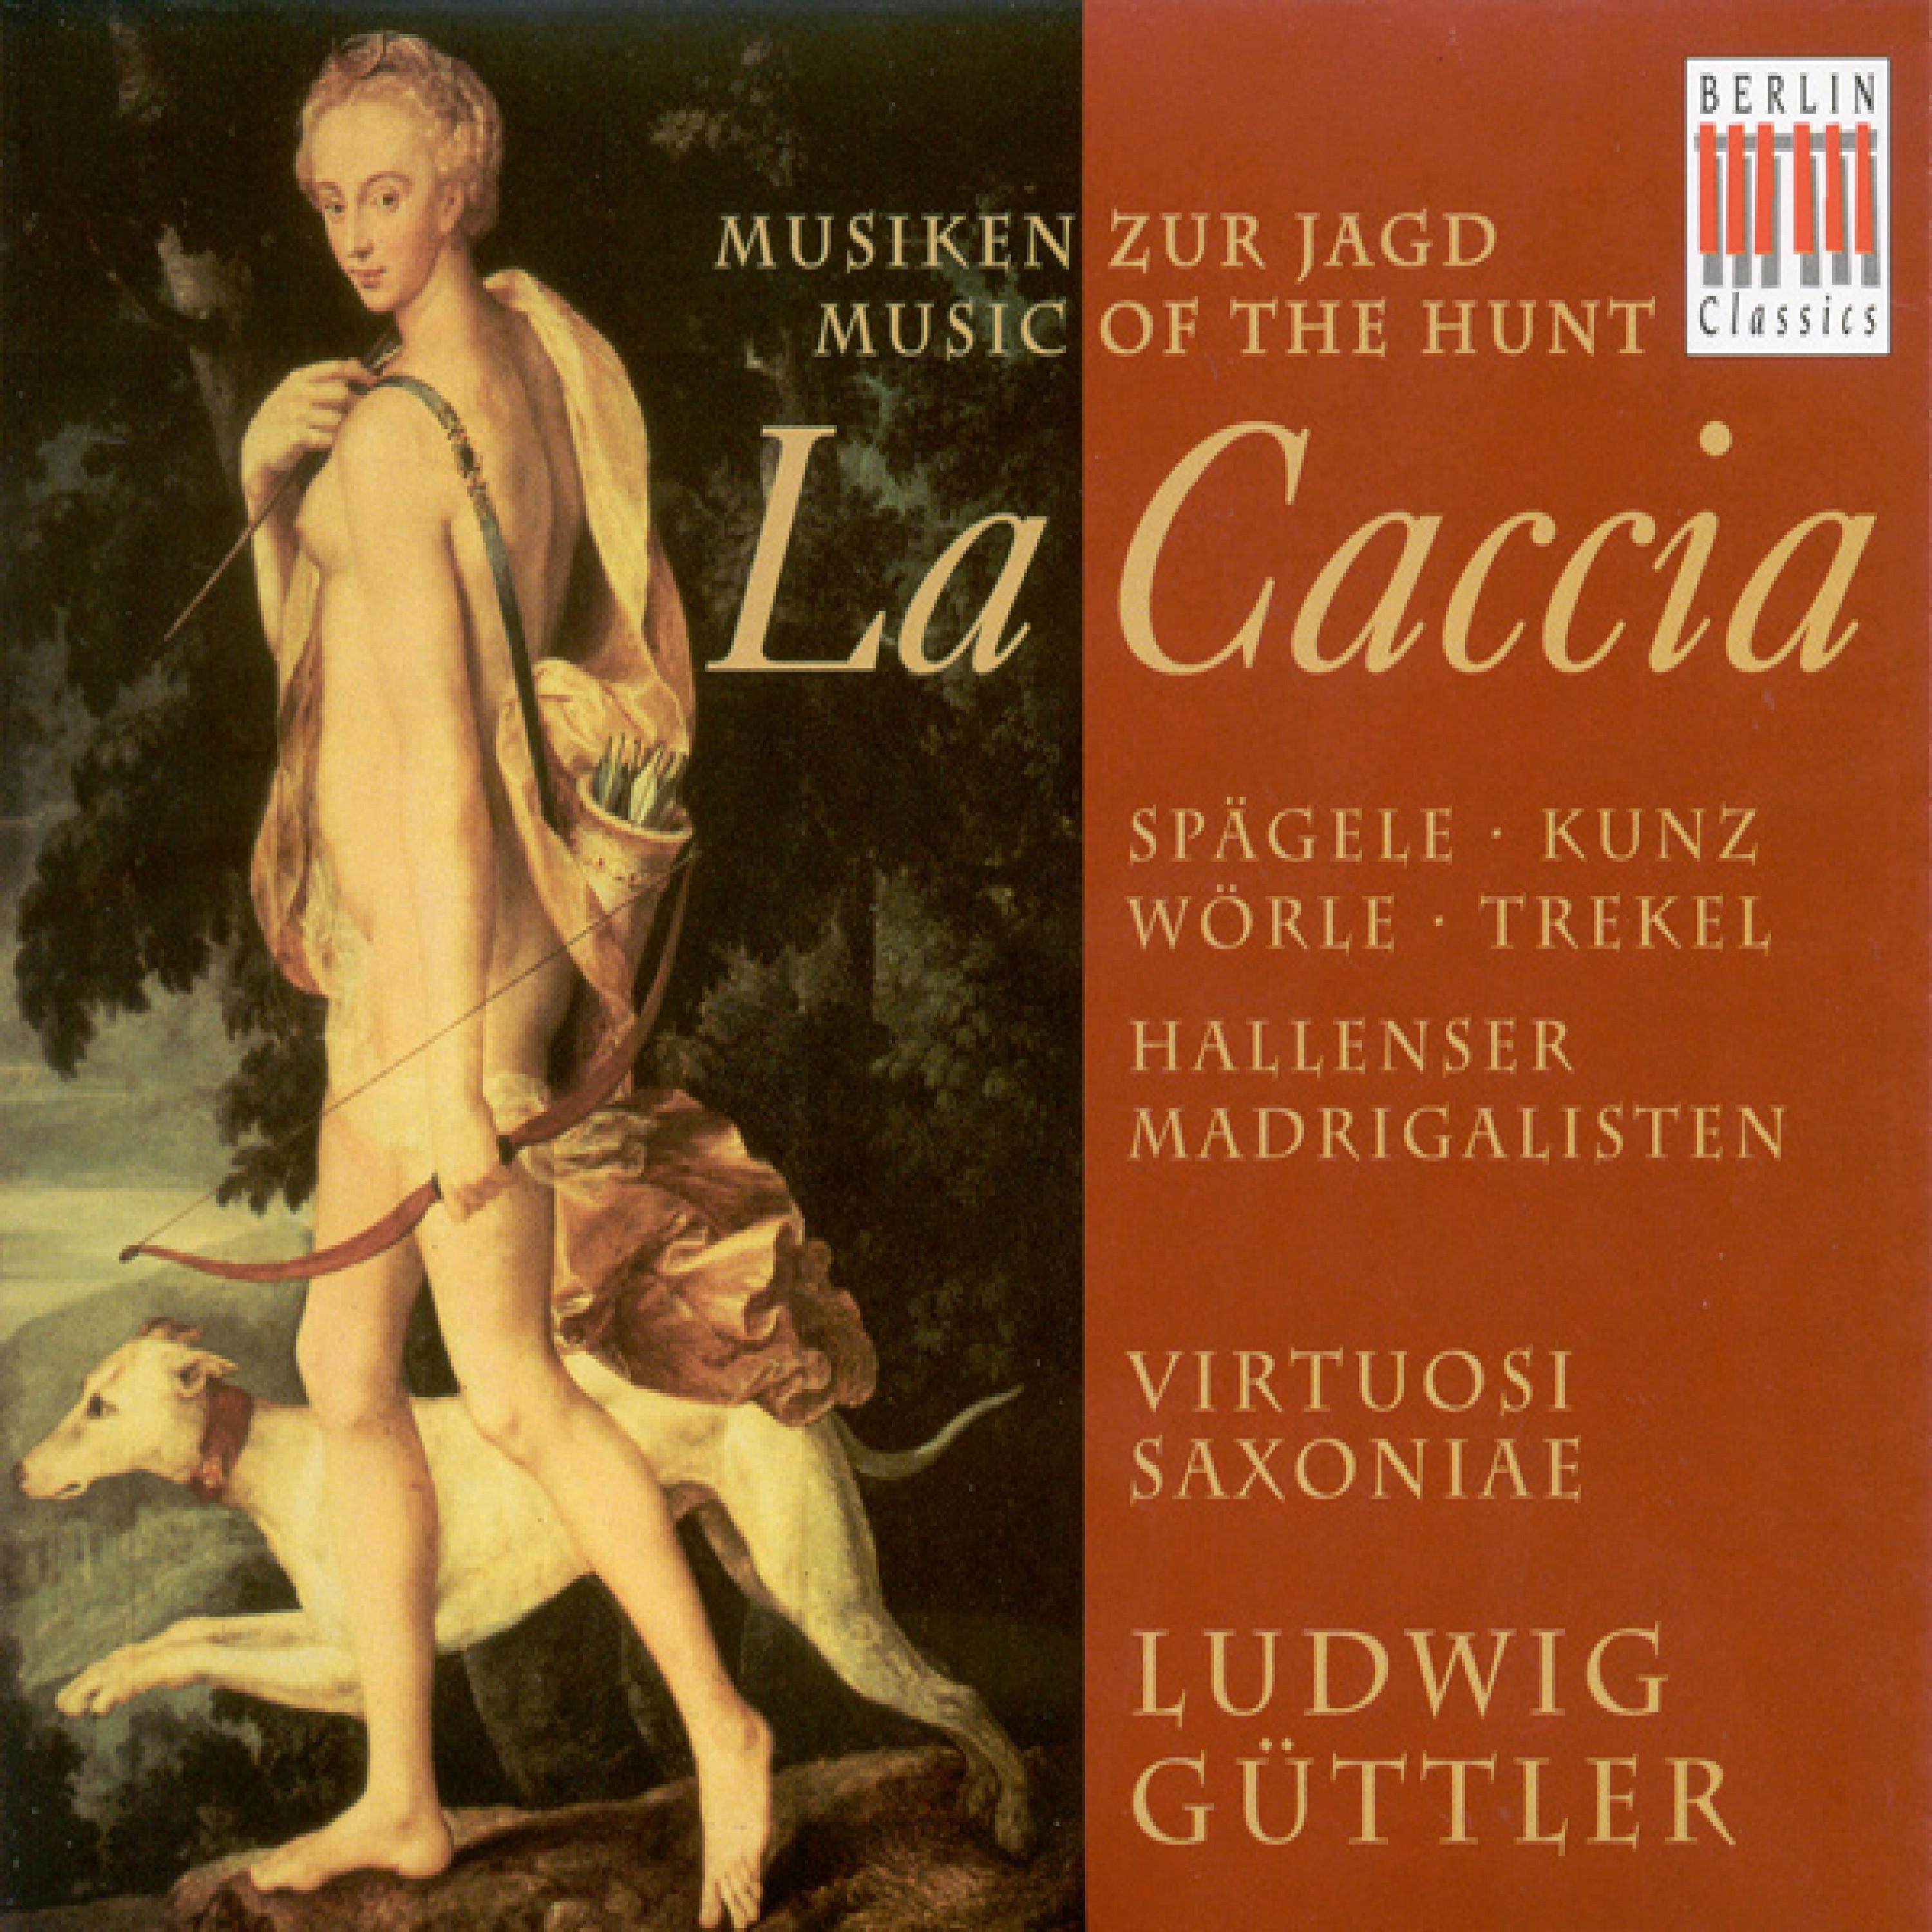 Violin Concerto in B flat major, Op. 8, No. 10, RV 362, "La caccia": I. Allegro